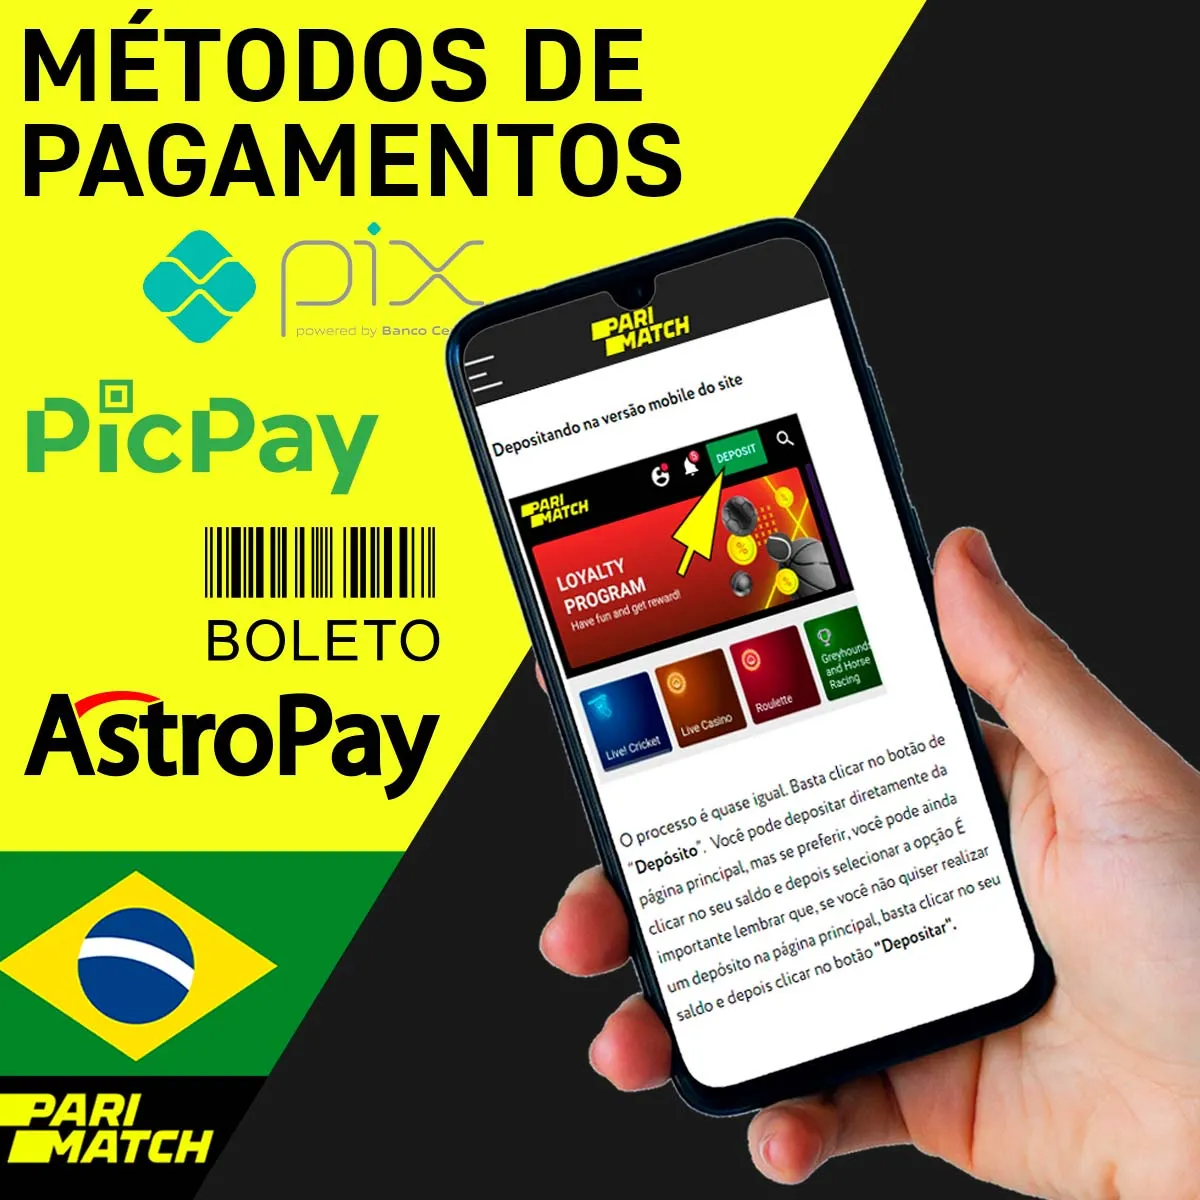 Métodos de pagamento disponíveis na casa de apostas Parimatch no Brasil